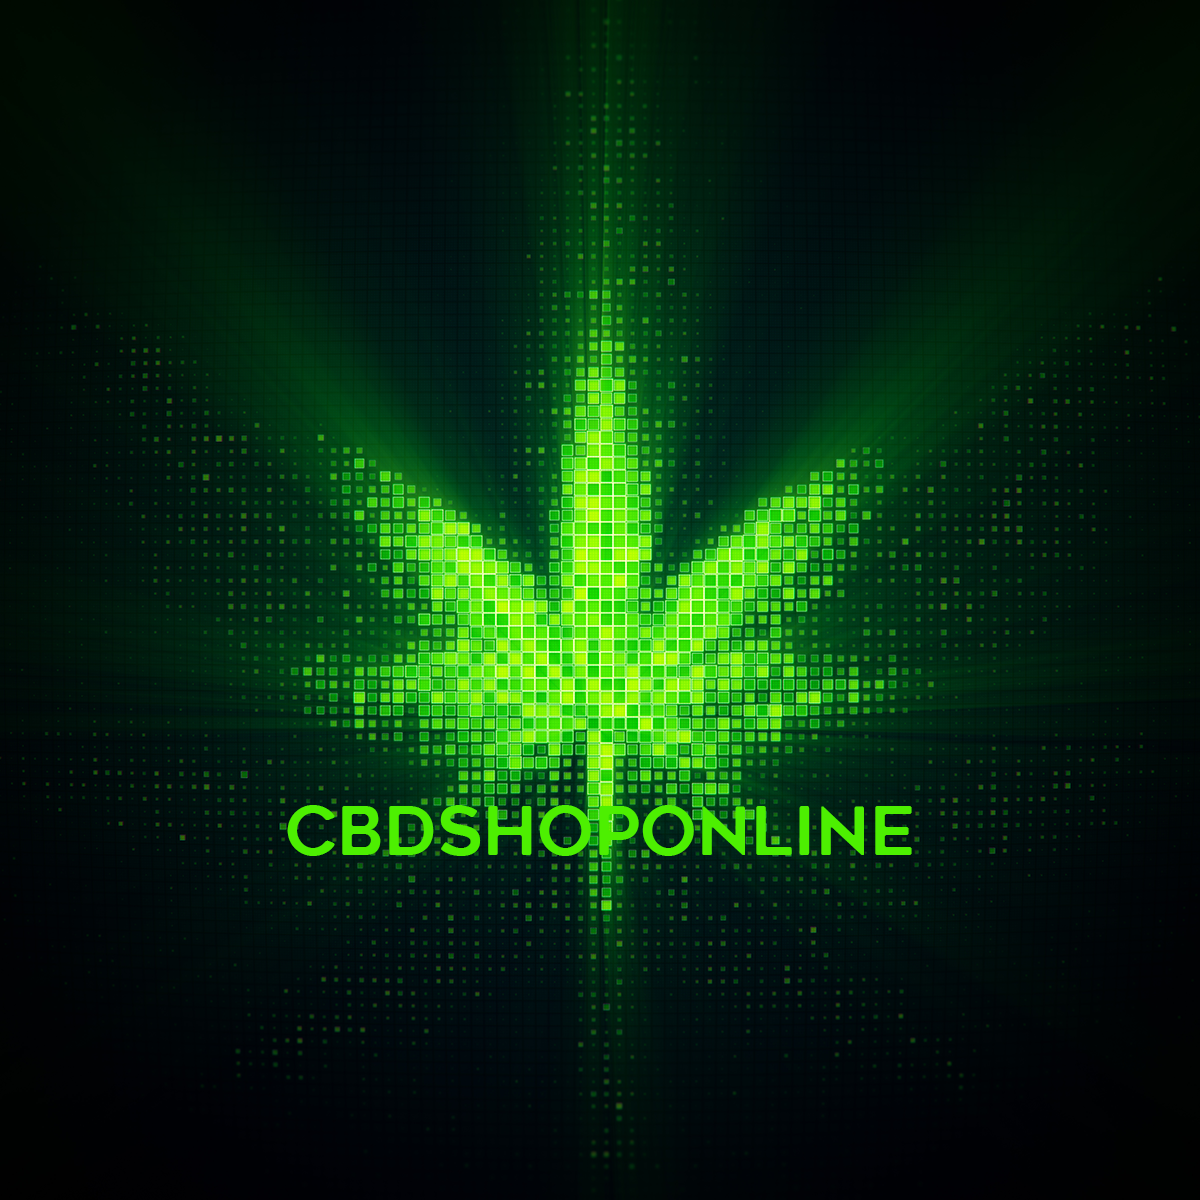 (c) Cbdshoponline.at